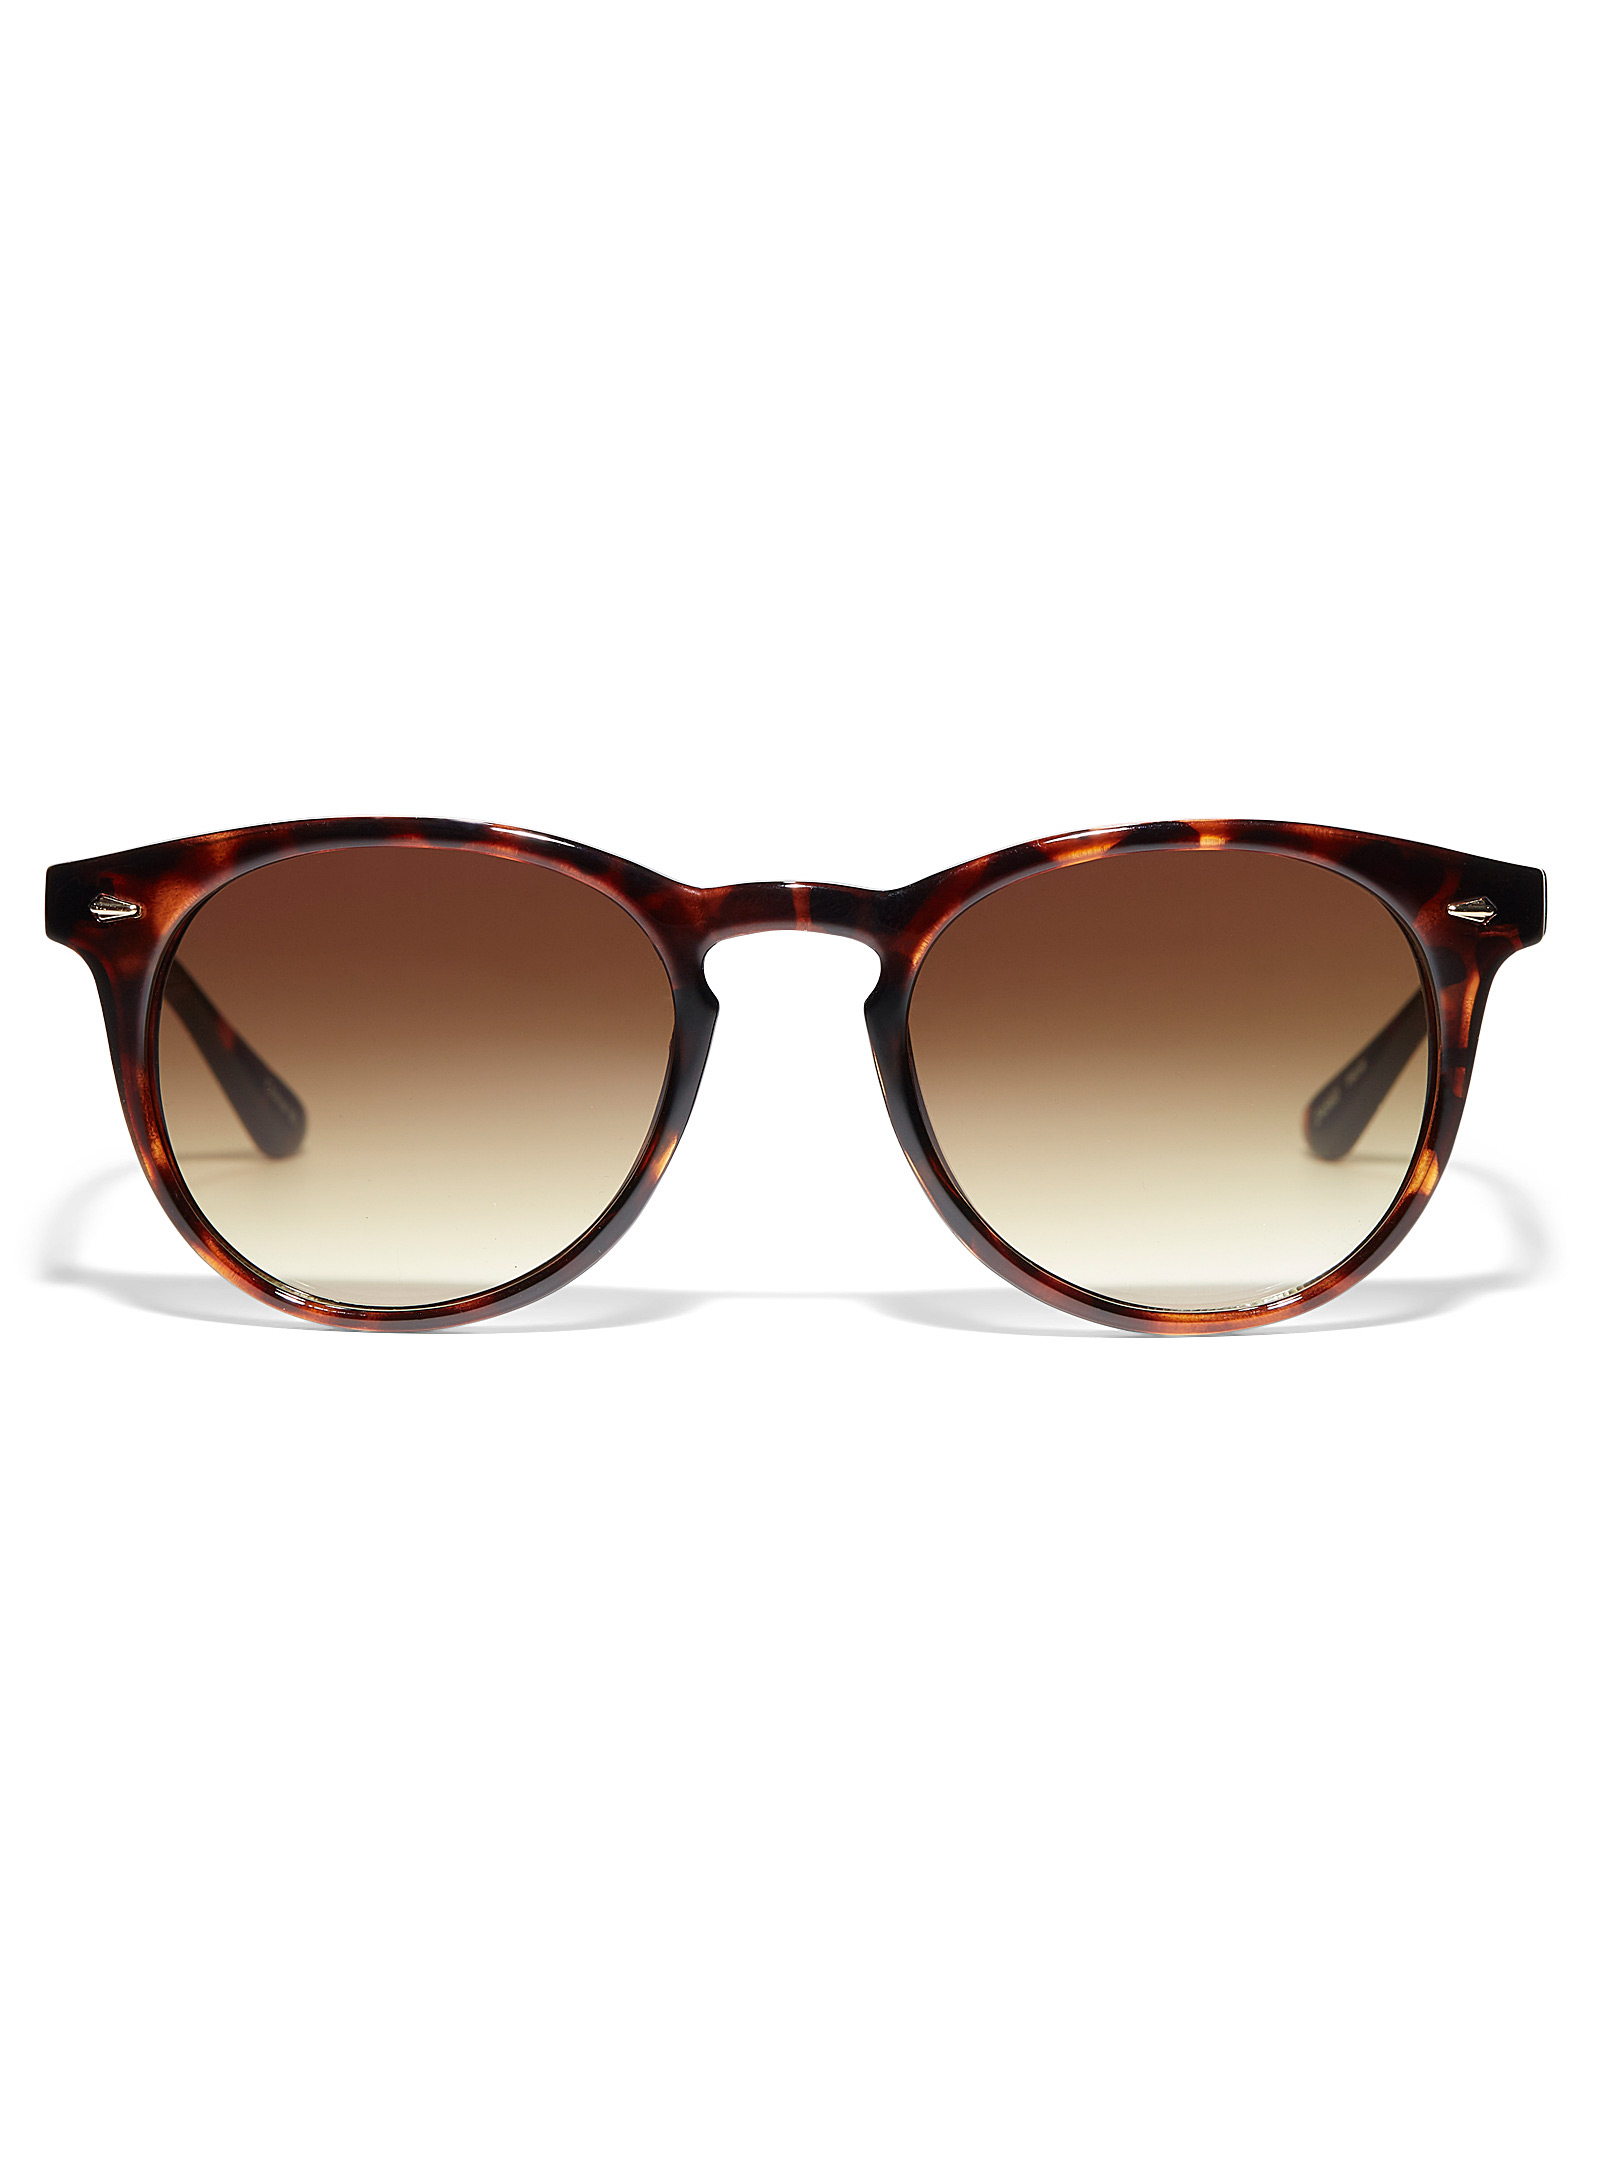 Simons - Women's Nola round sunglasses